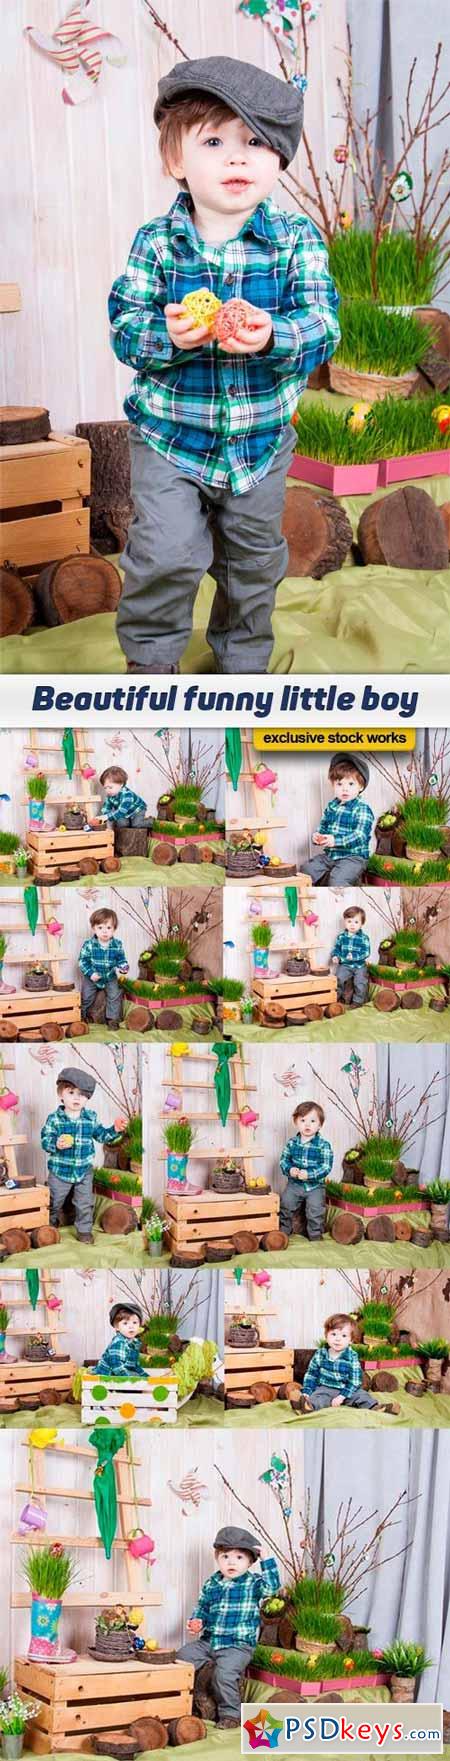 Beautiful funny little boy - 10 UHQ JPEG